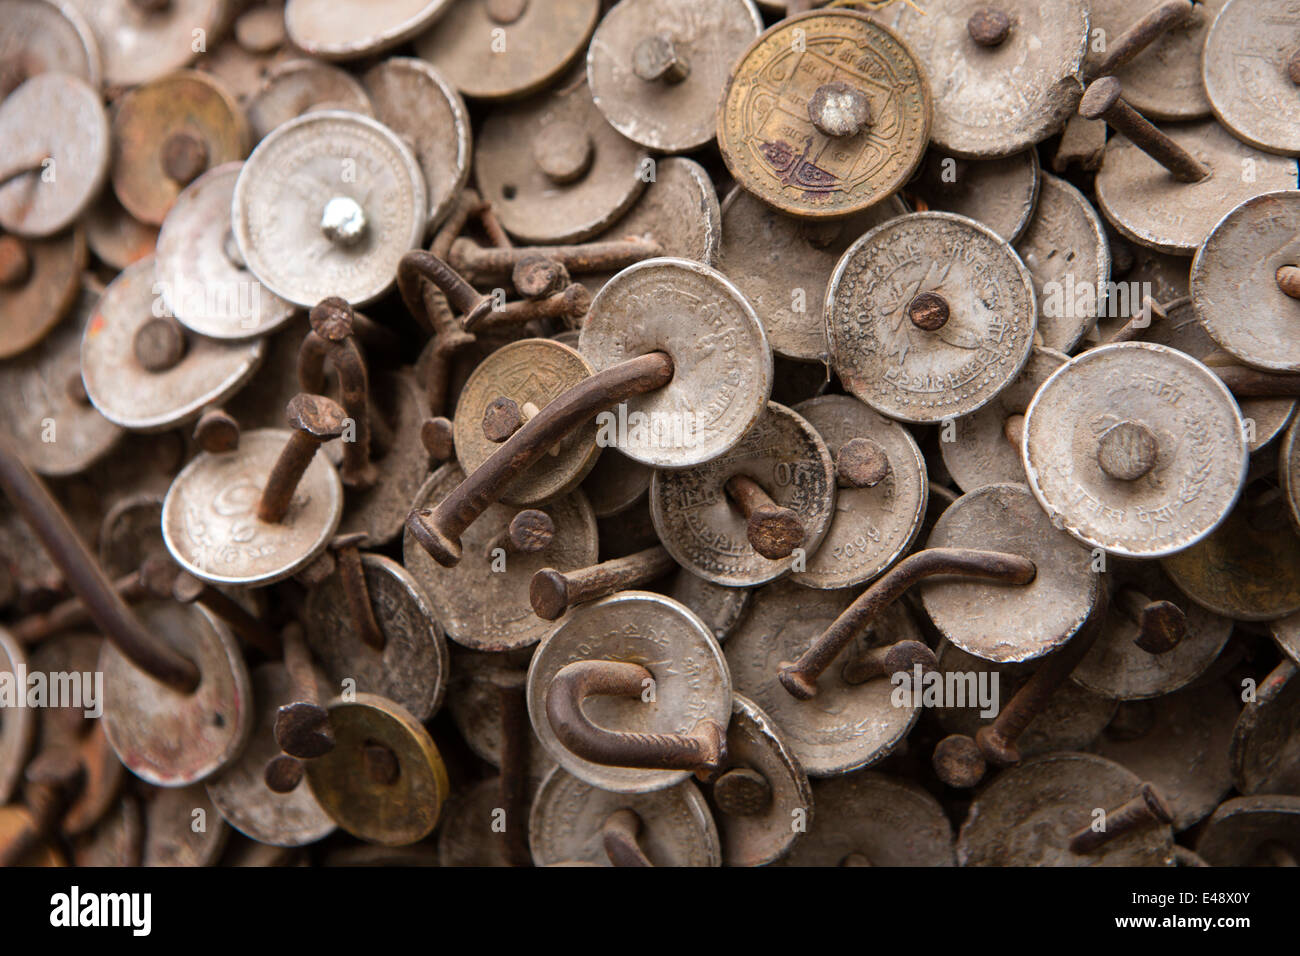 Nepal, Kathmandu, Bangemudha Square, Vaisha Dev Toothache God tree, coins nailed to cure tooth ache Stock Photo